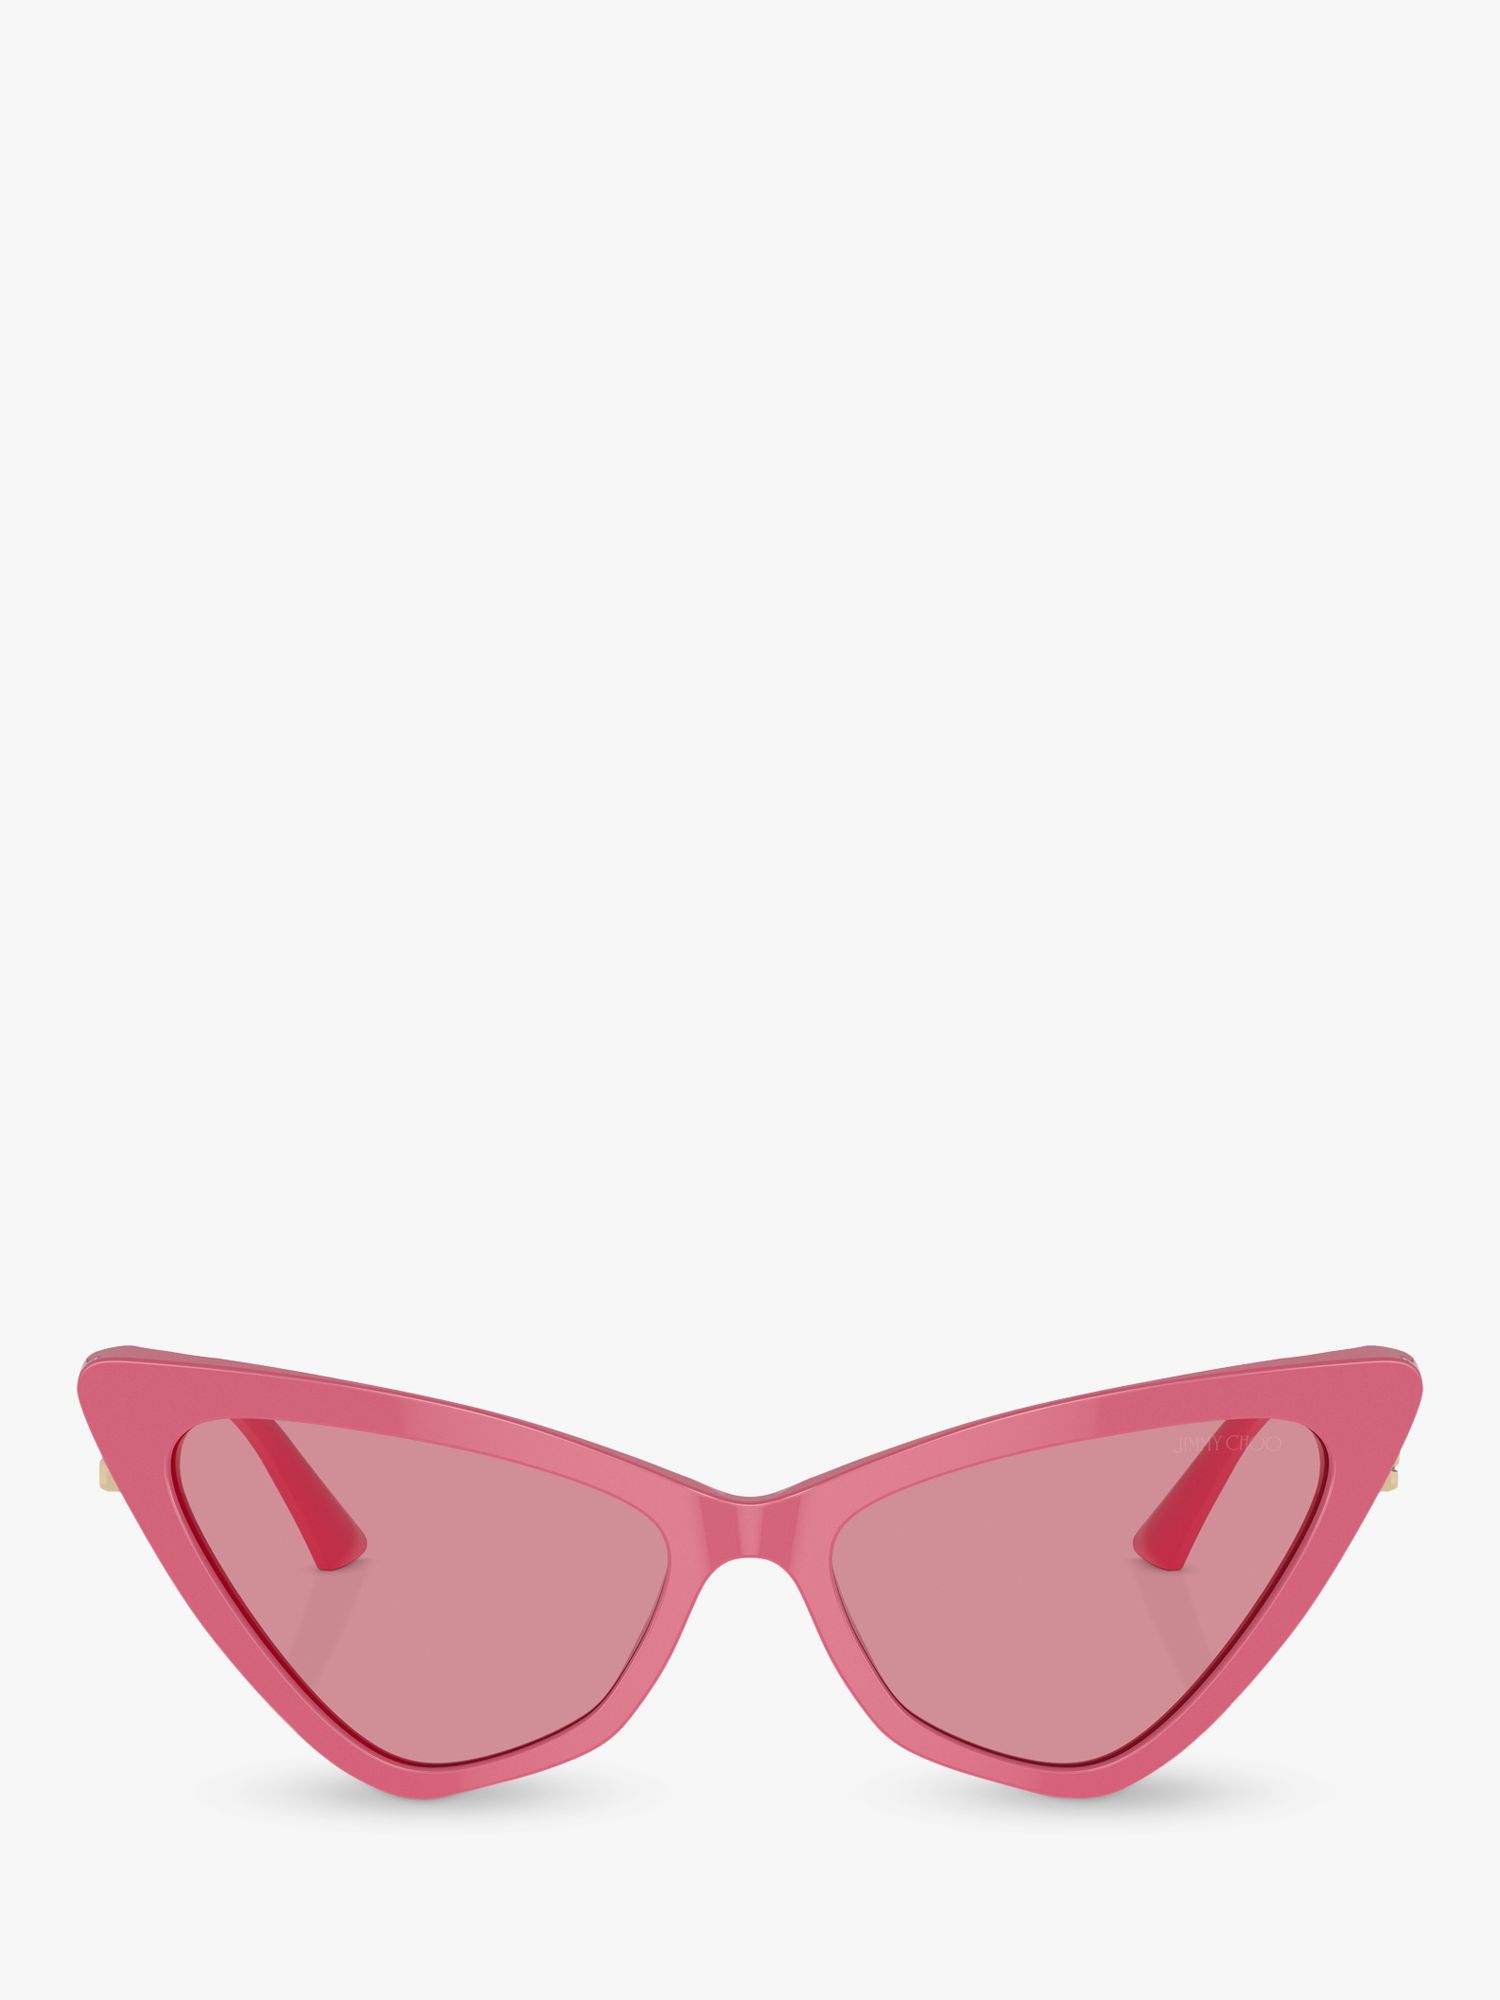 Buy Jimmy Choo JC5008 Women's Cat's Eye Sunglasses, Pink Online at johnlewis.com